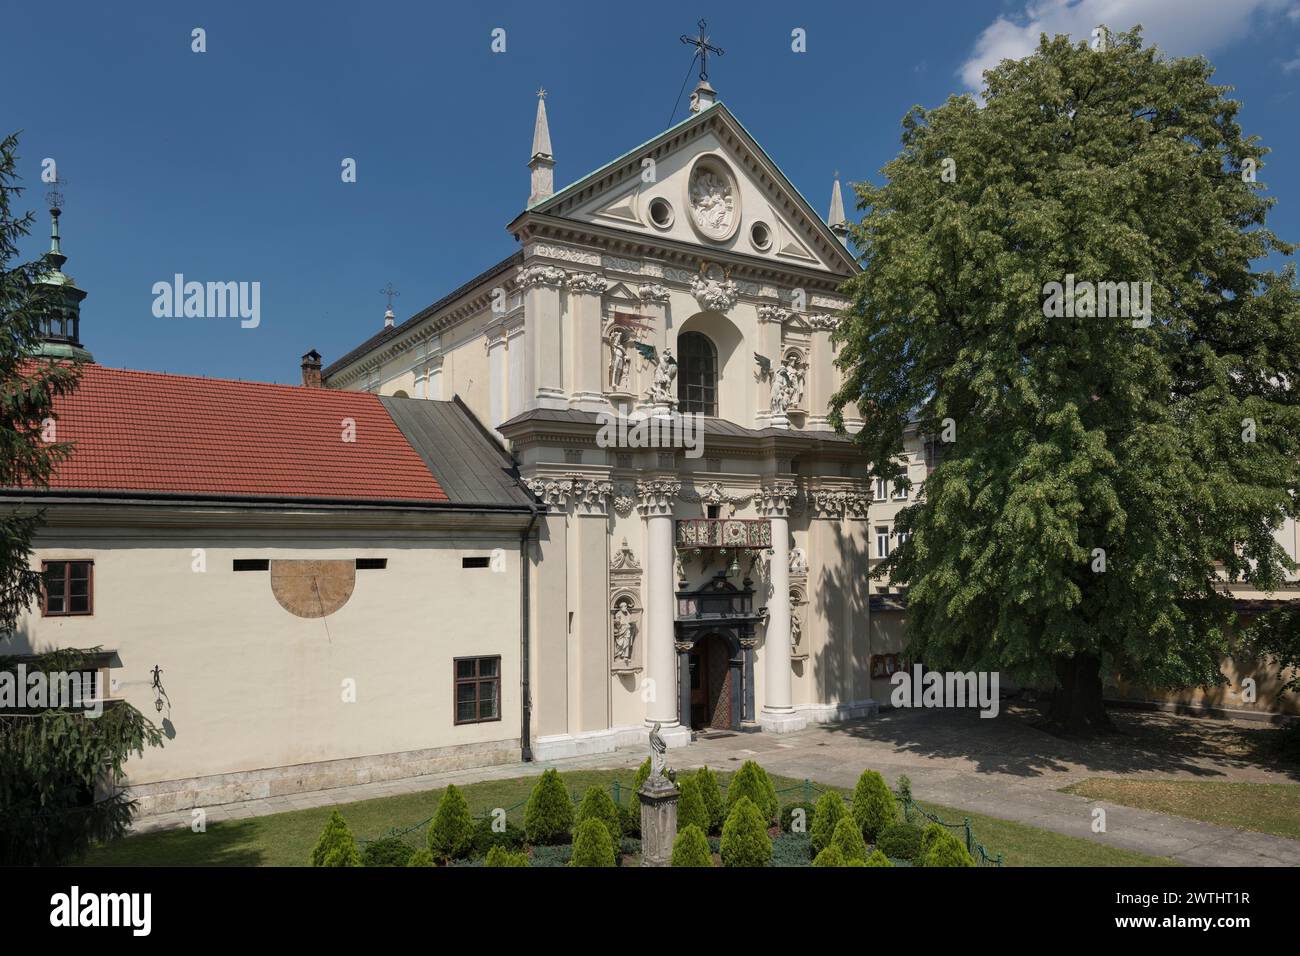 Kirche St. Francis de Sales, Krowoderska St., Krakau, Polen Stockfoto